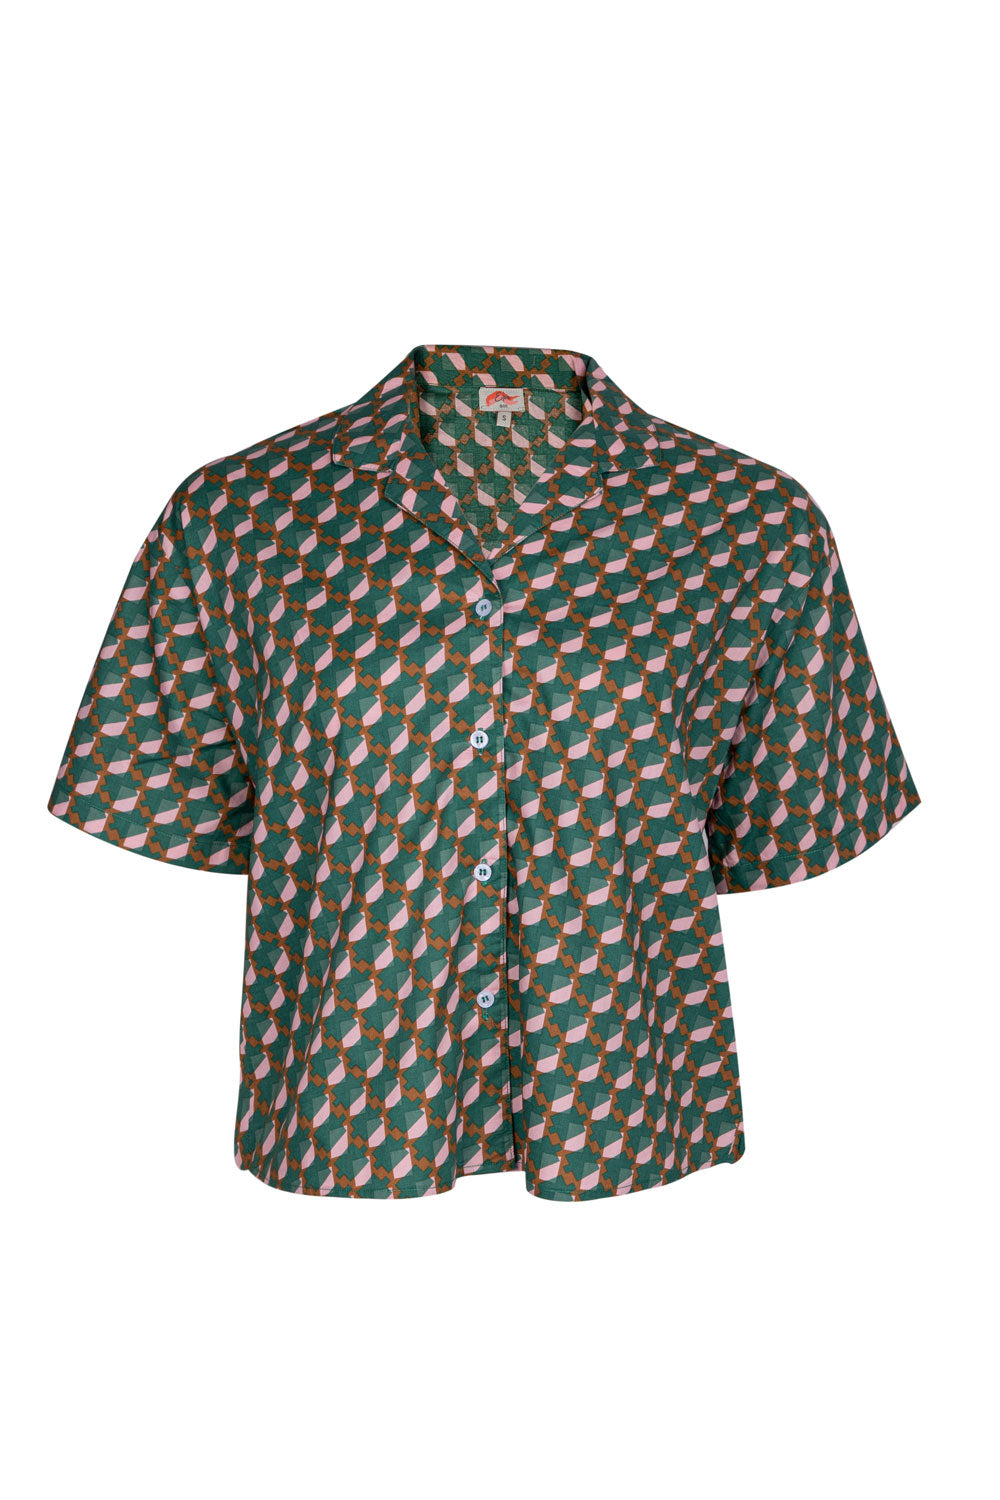 Geometric Bowler Shirt